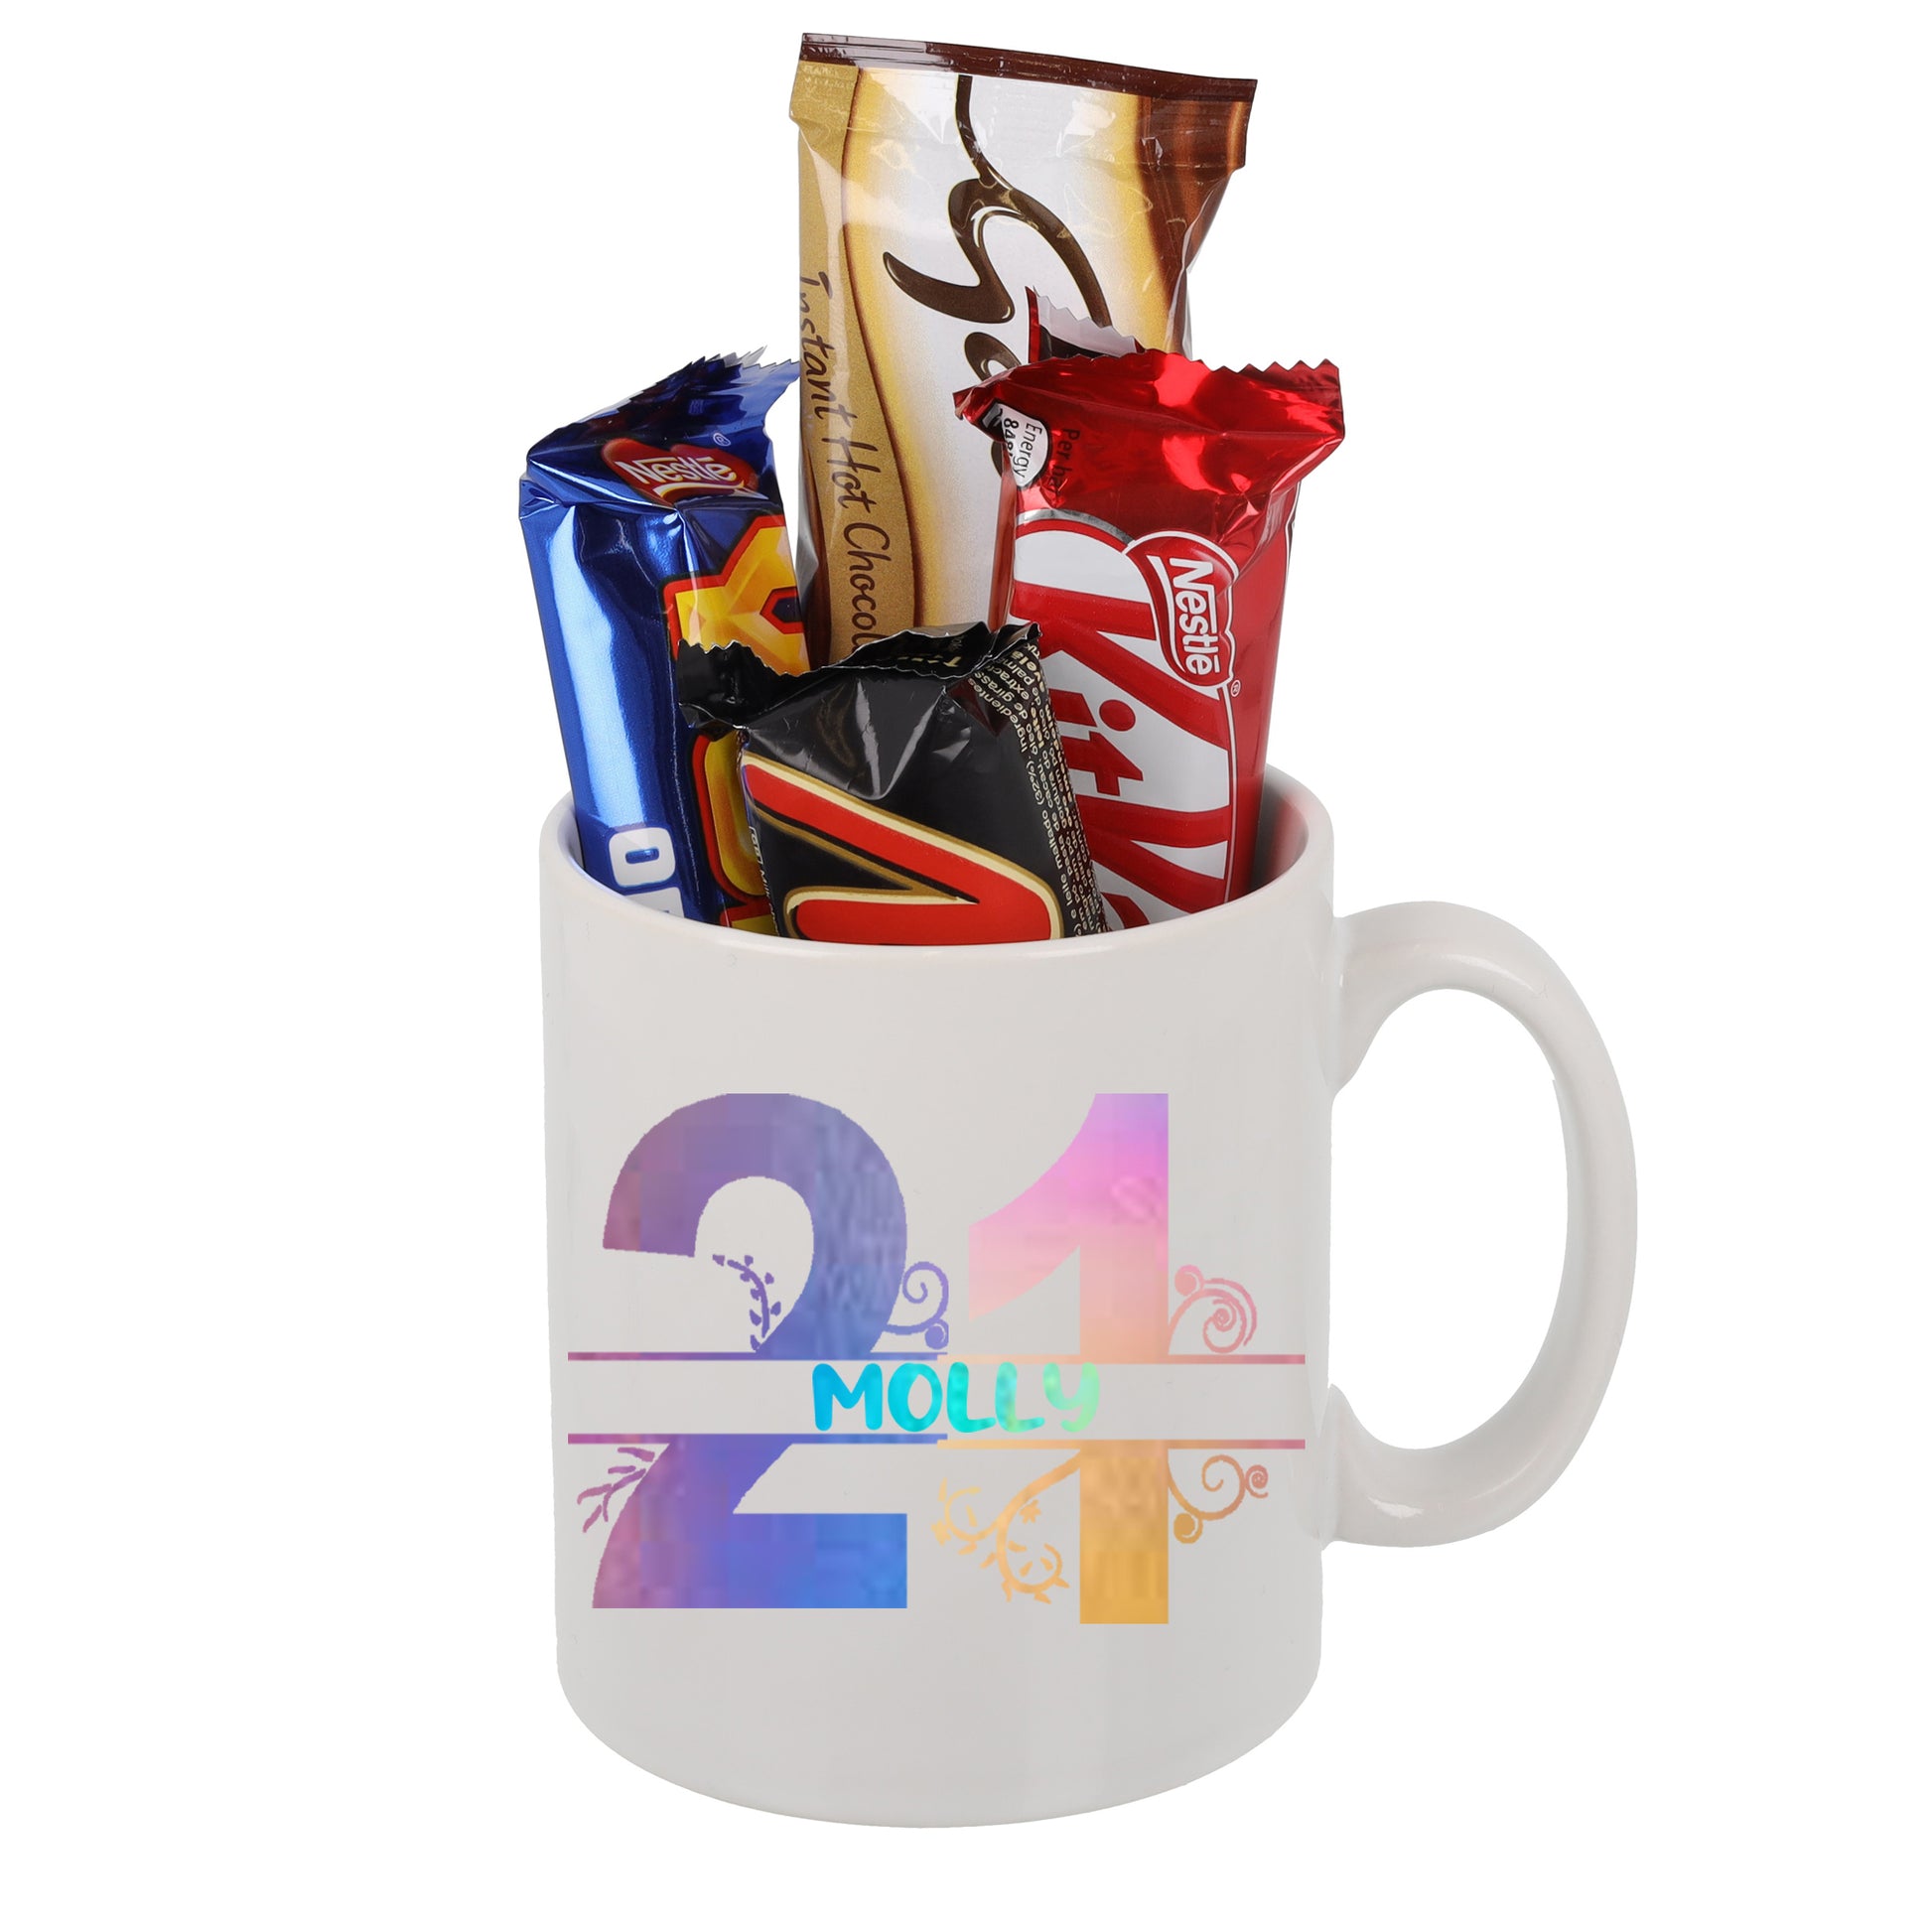 Personalised Filled 21st Birthday Mug  - Always Looking Good - White Filled Mug  